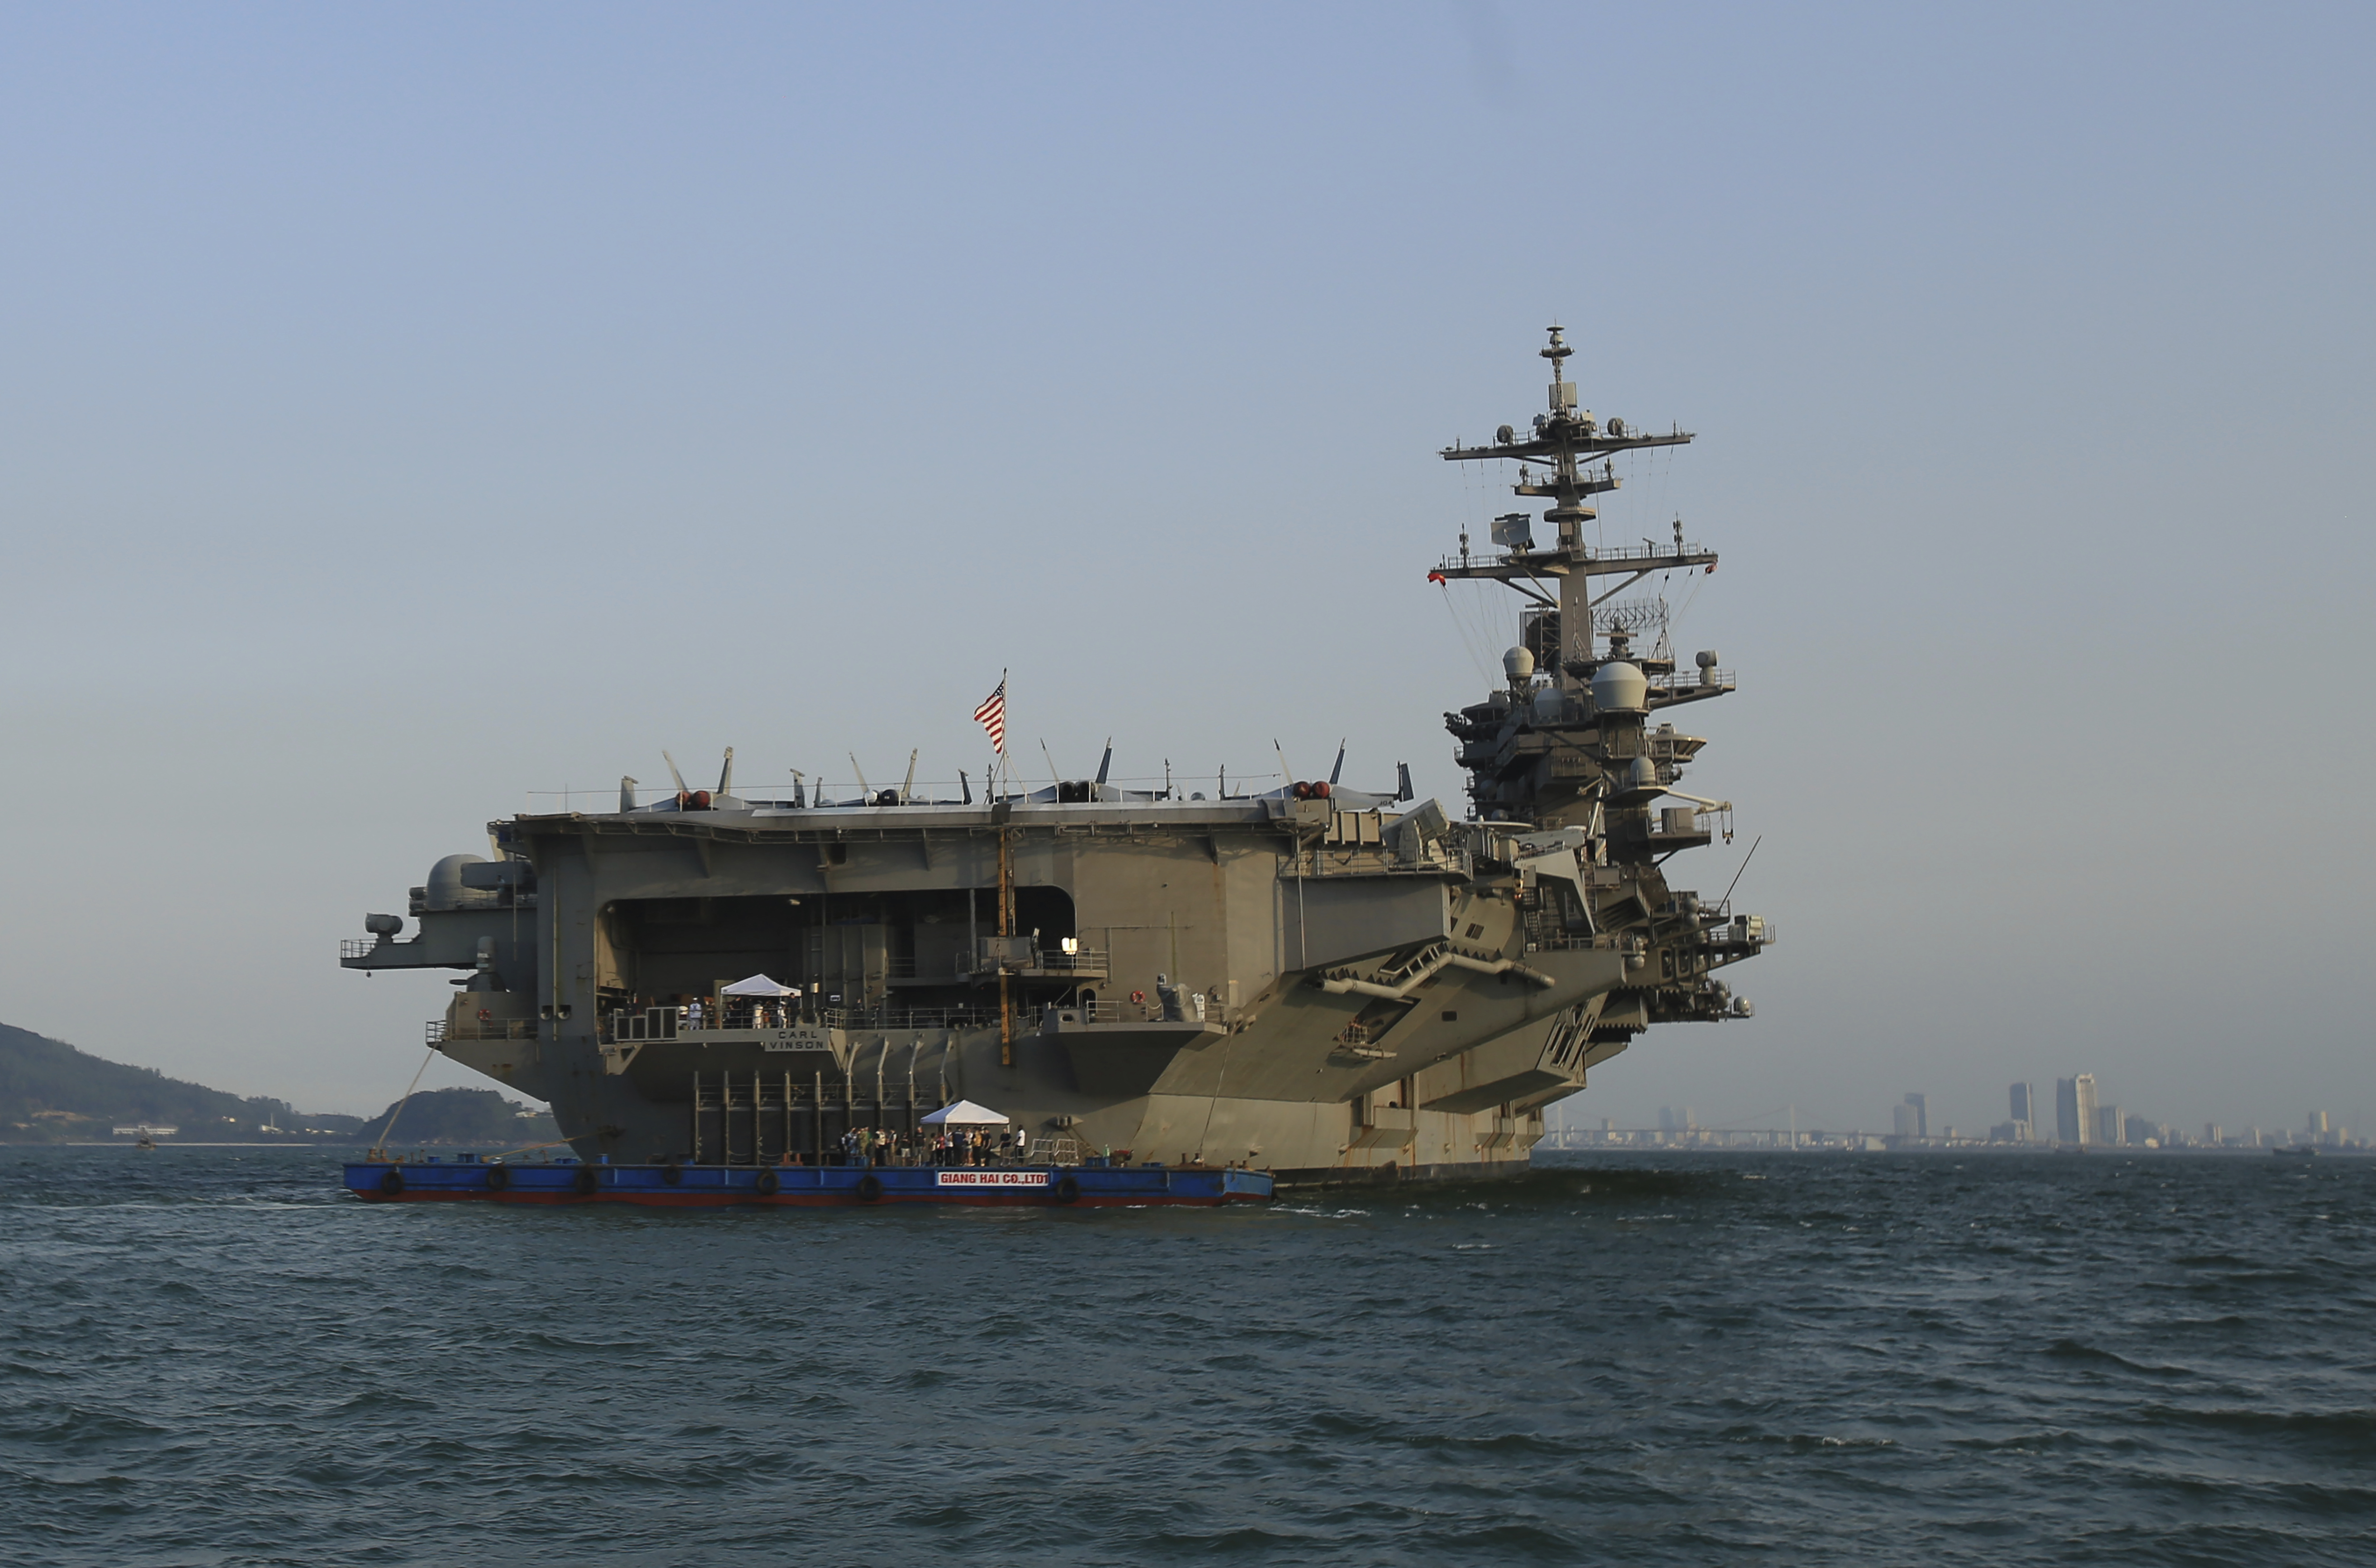 La portaerei USS Carl Vinson in visita nel Vietnam